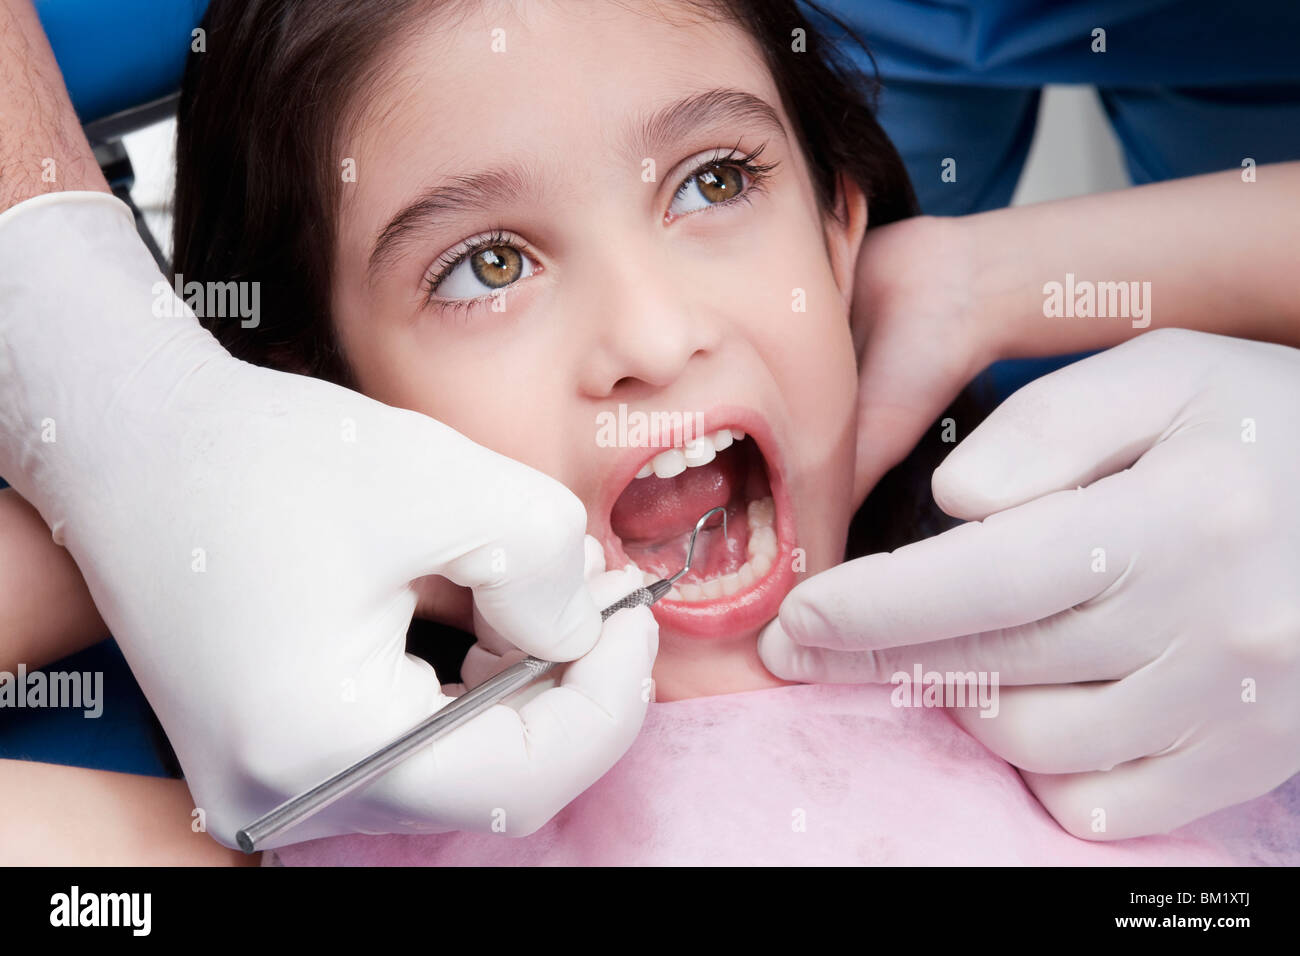 Dentist examining a girl's teeth Stock Photo